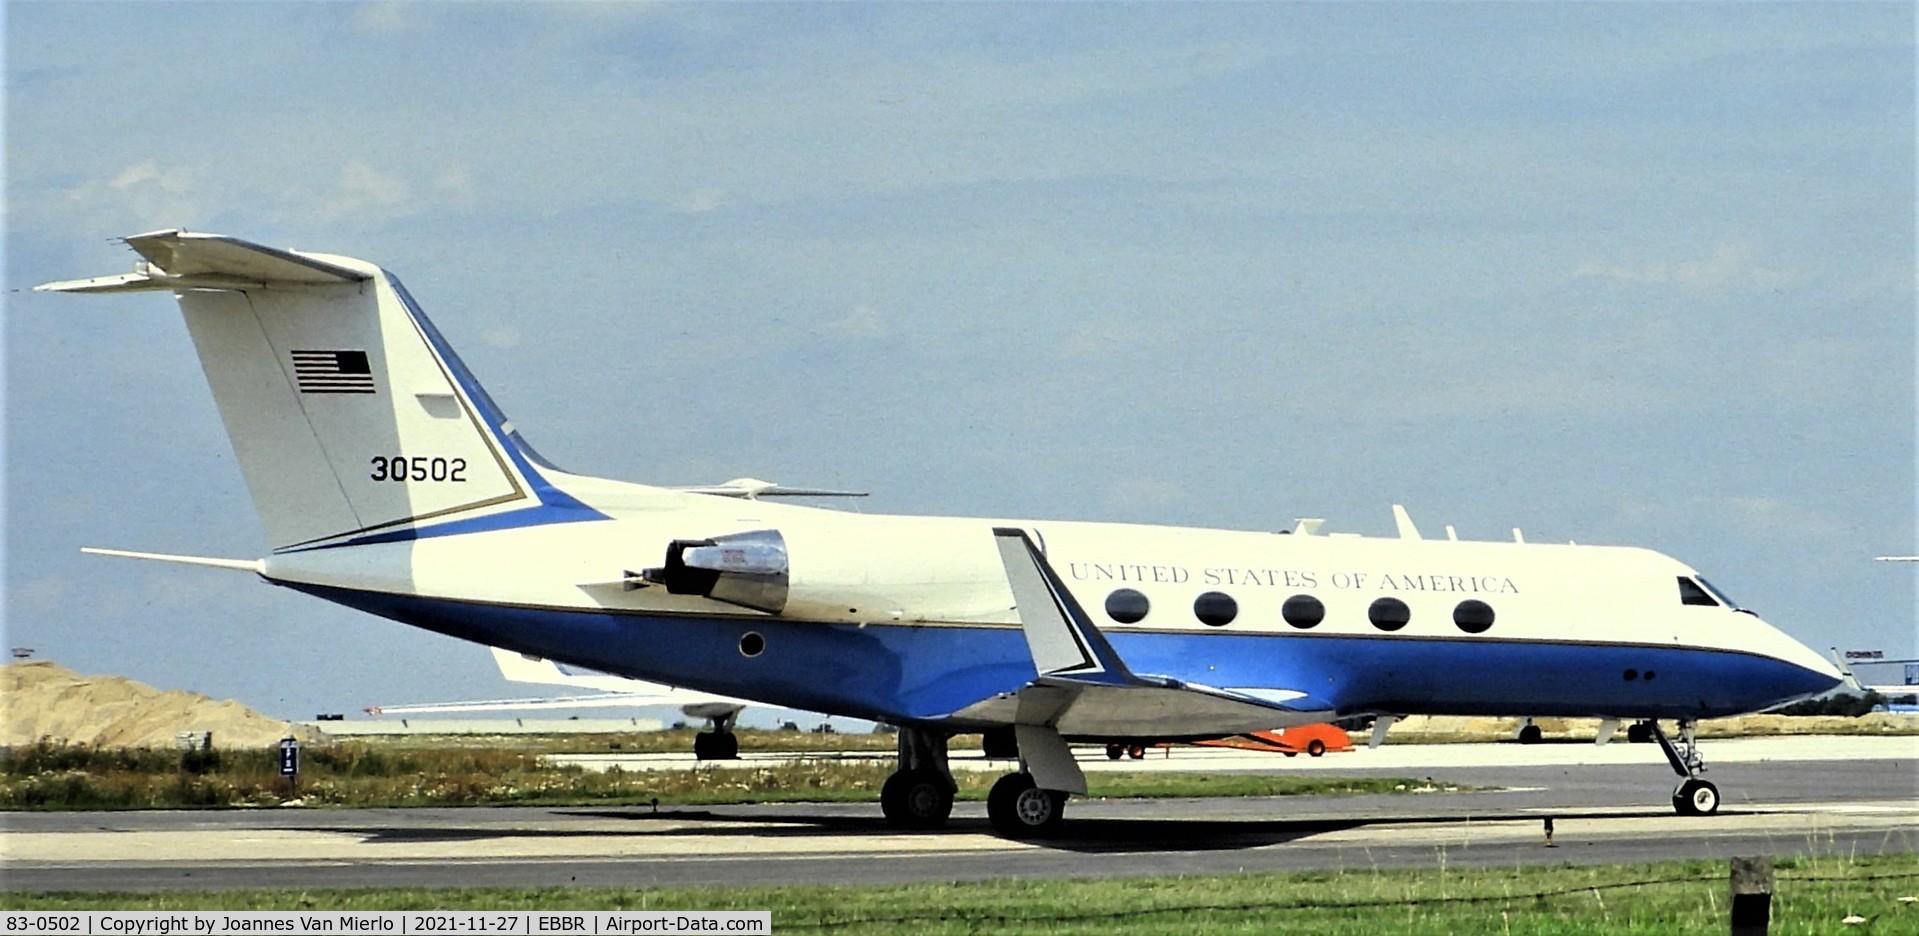 83-0502, 1983 Grumman C-20A Gulfstream III C/N 389, Slide scan